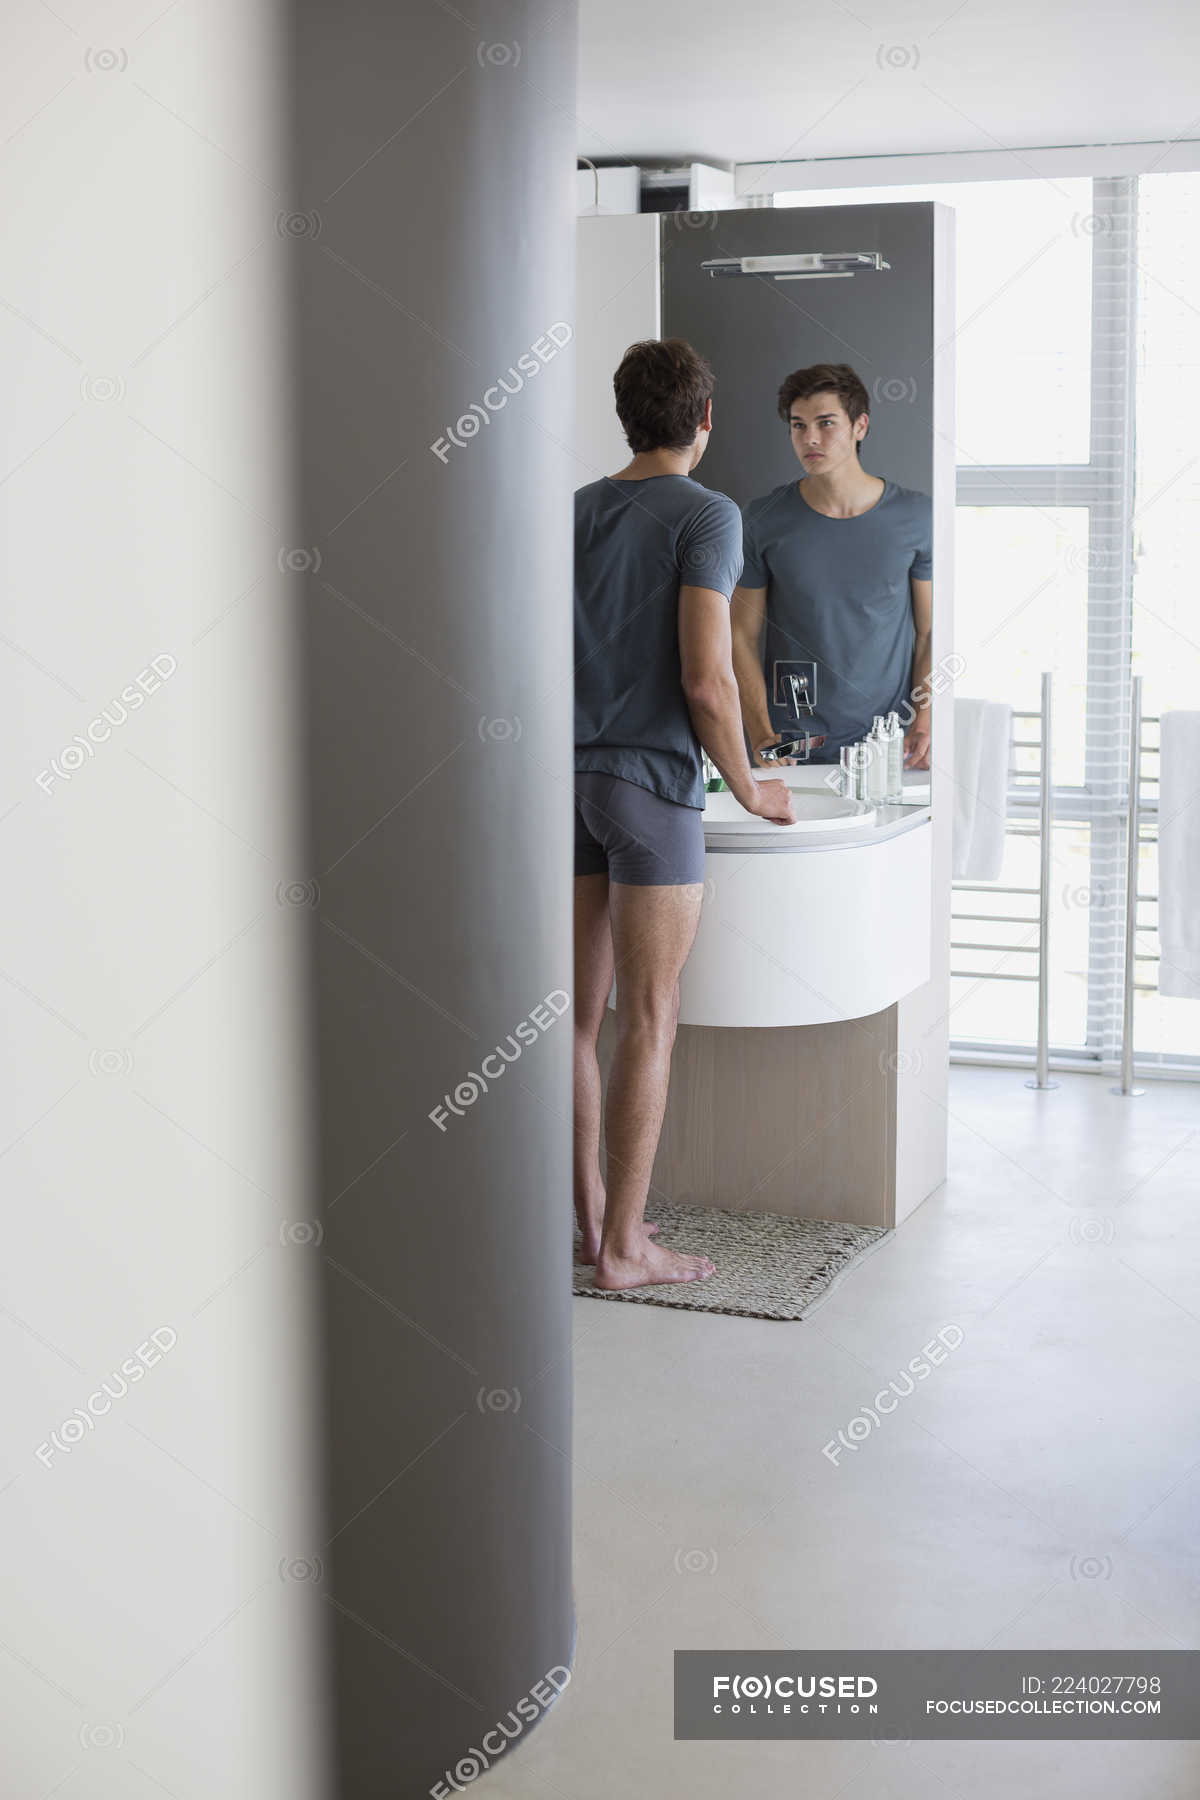 mirror reflection man